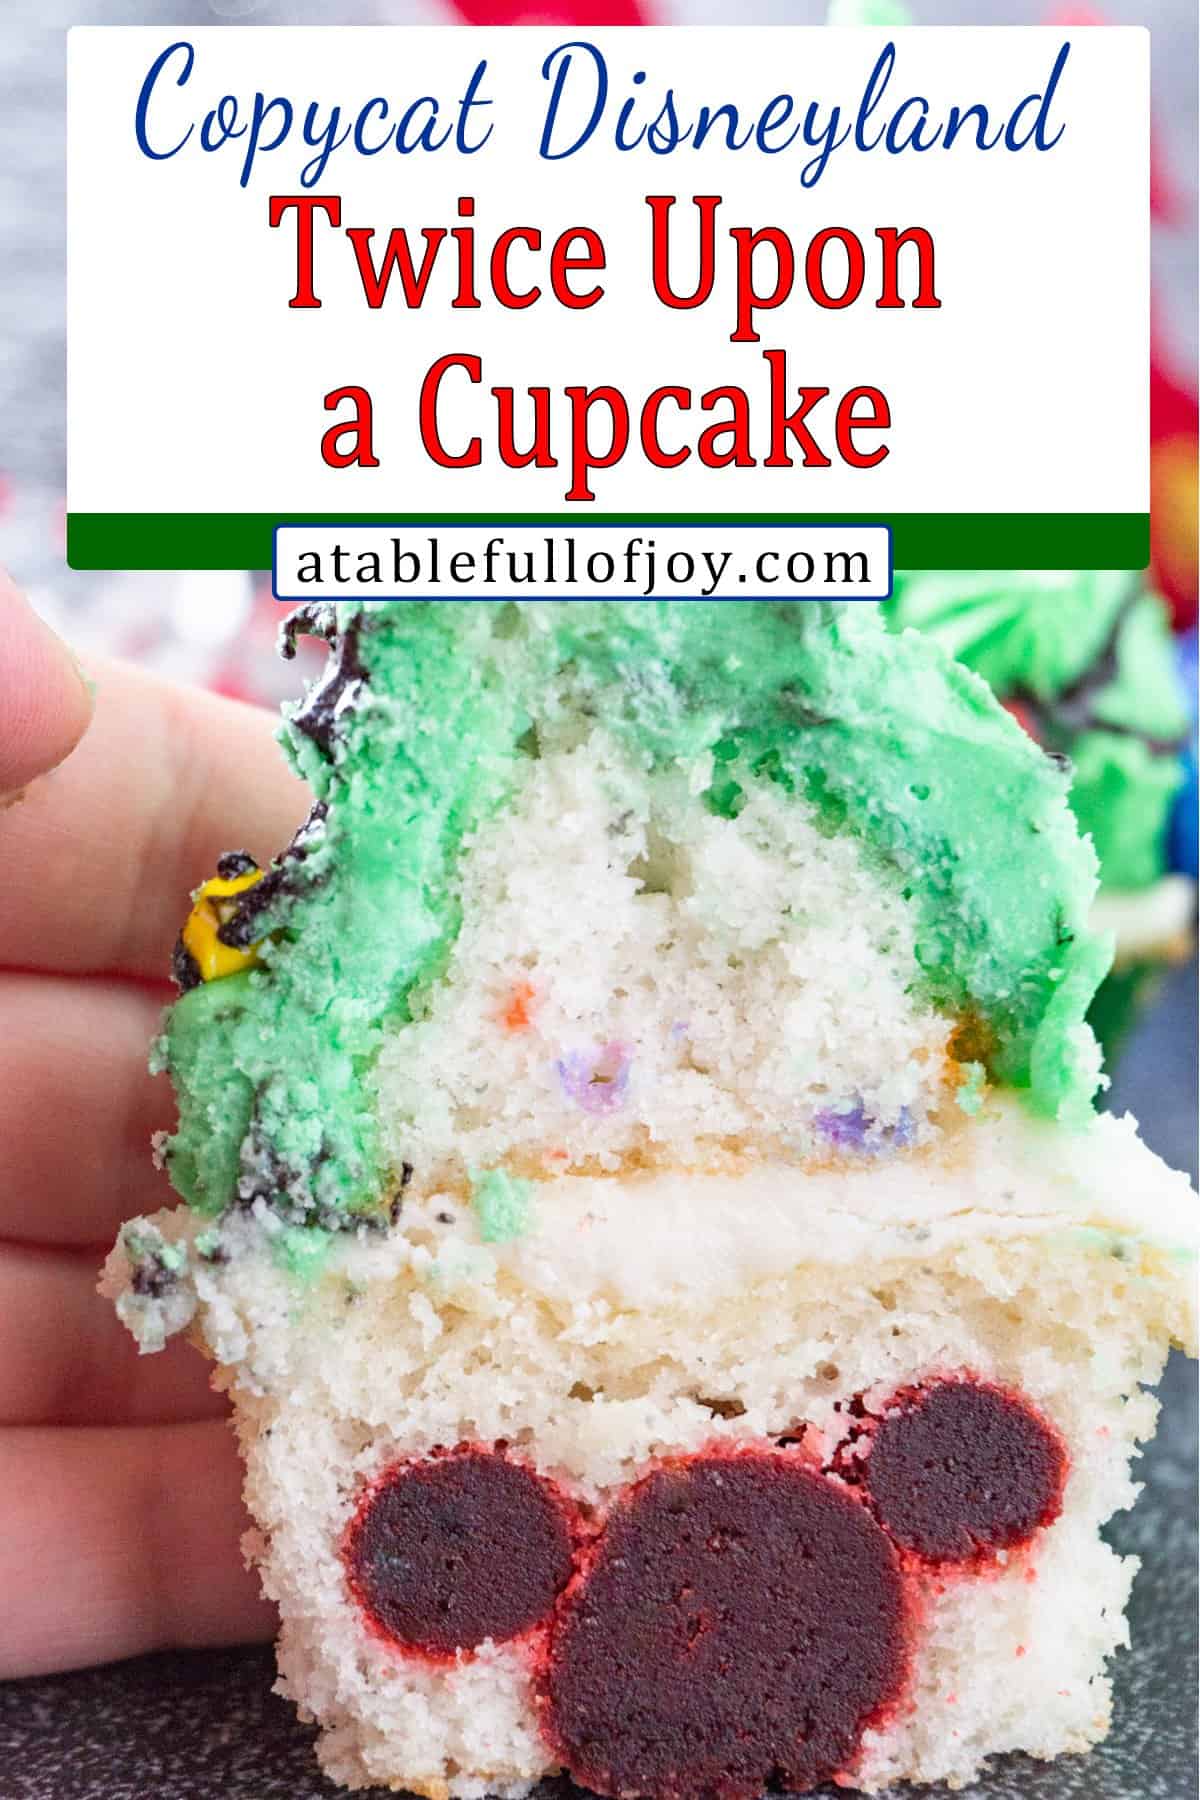 twice upon a christmas cupcakes pinterest image